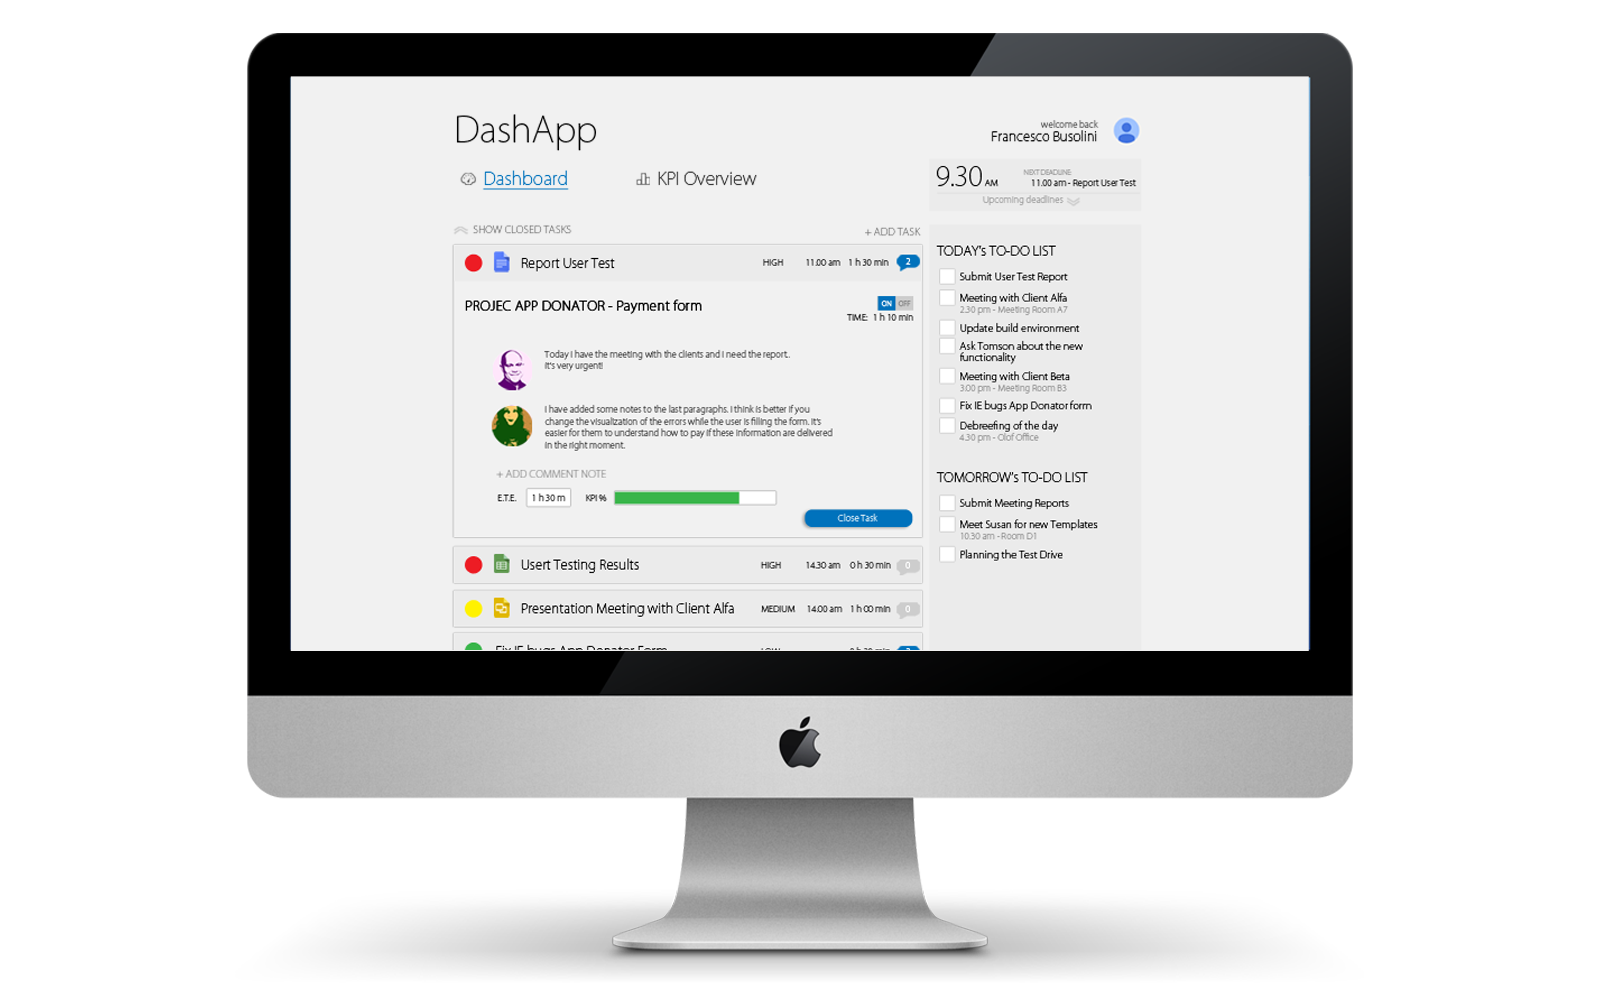 The design of the desktop version DashApp.